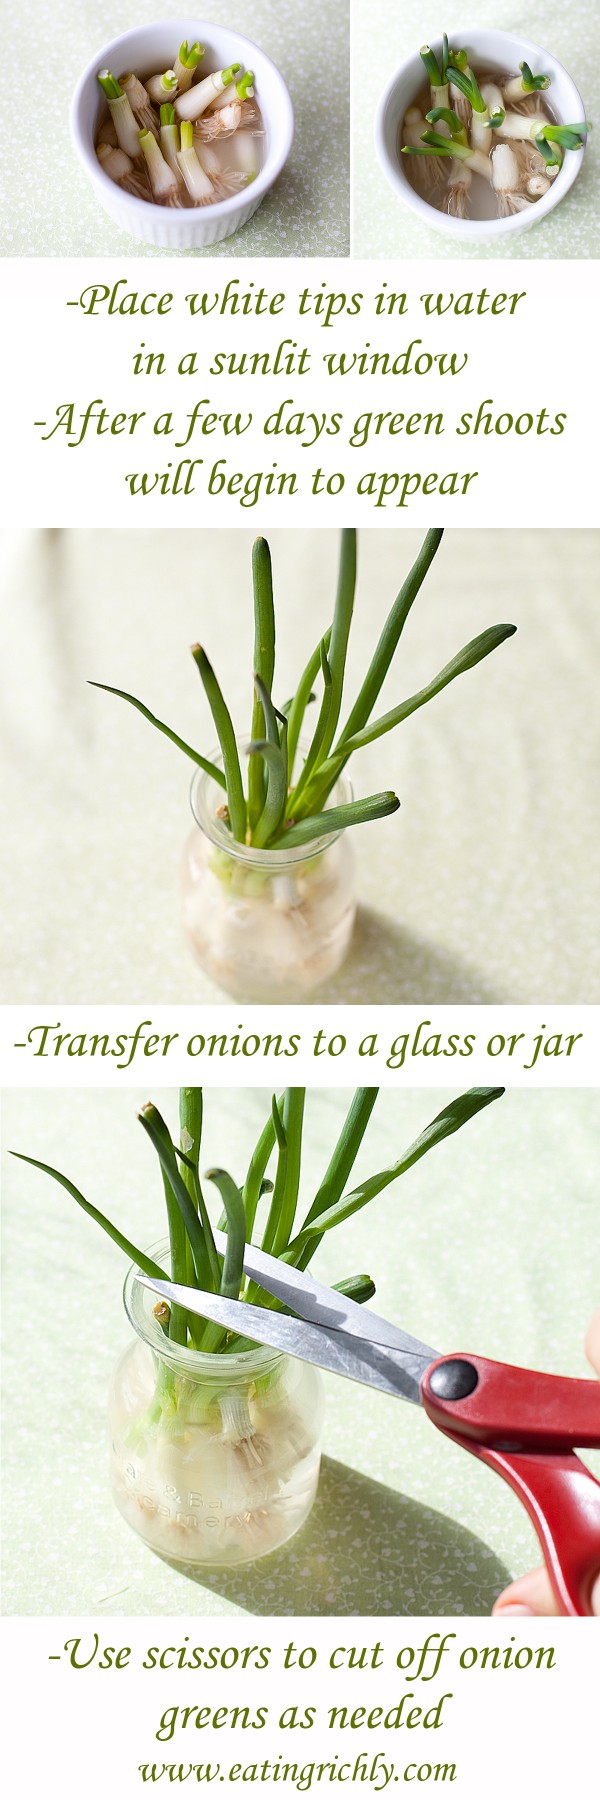 regrow-cut-green-onions